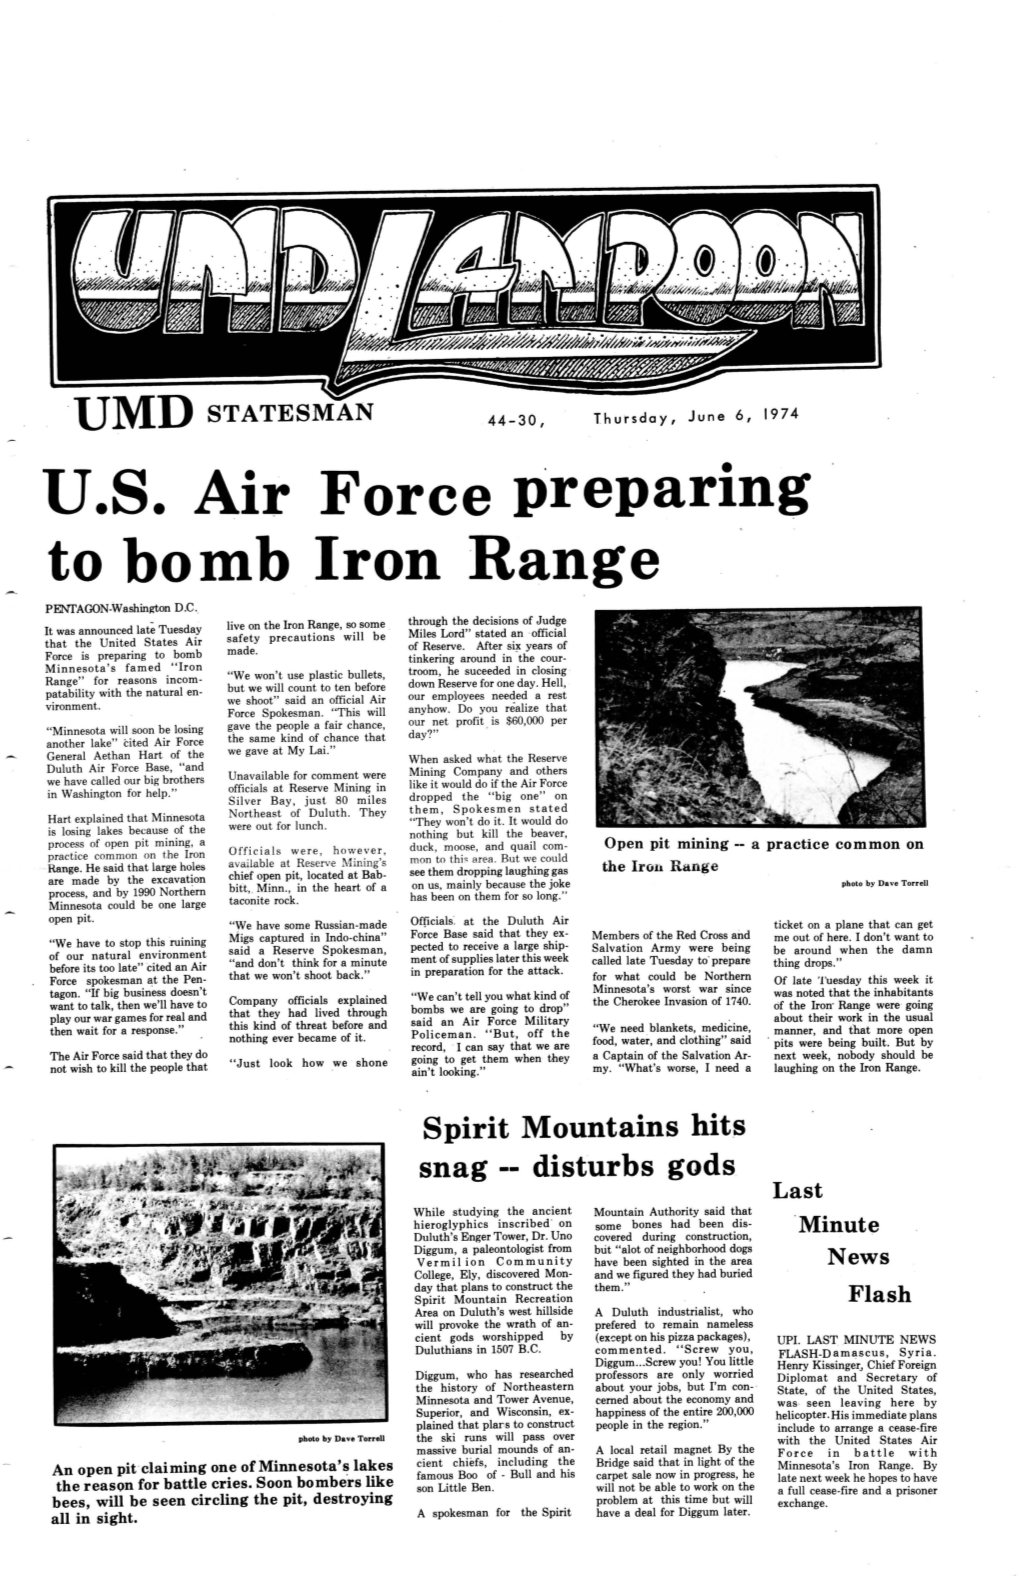 U.S. Air Force Preparing to Bomb Iron Range PENTAGON-Washington D.C